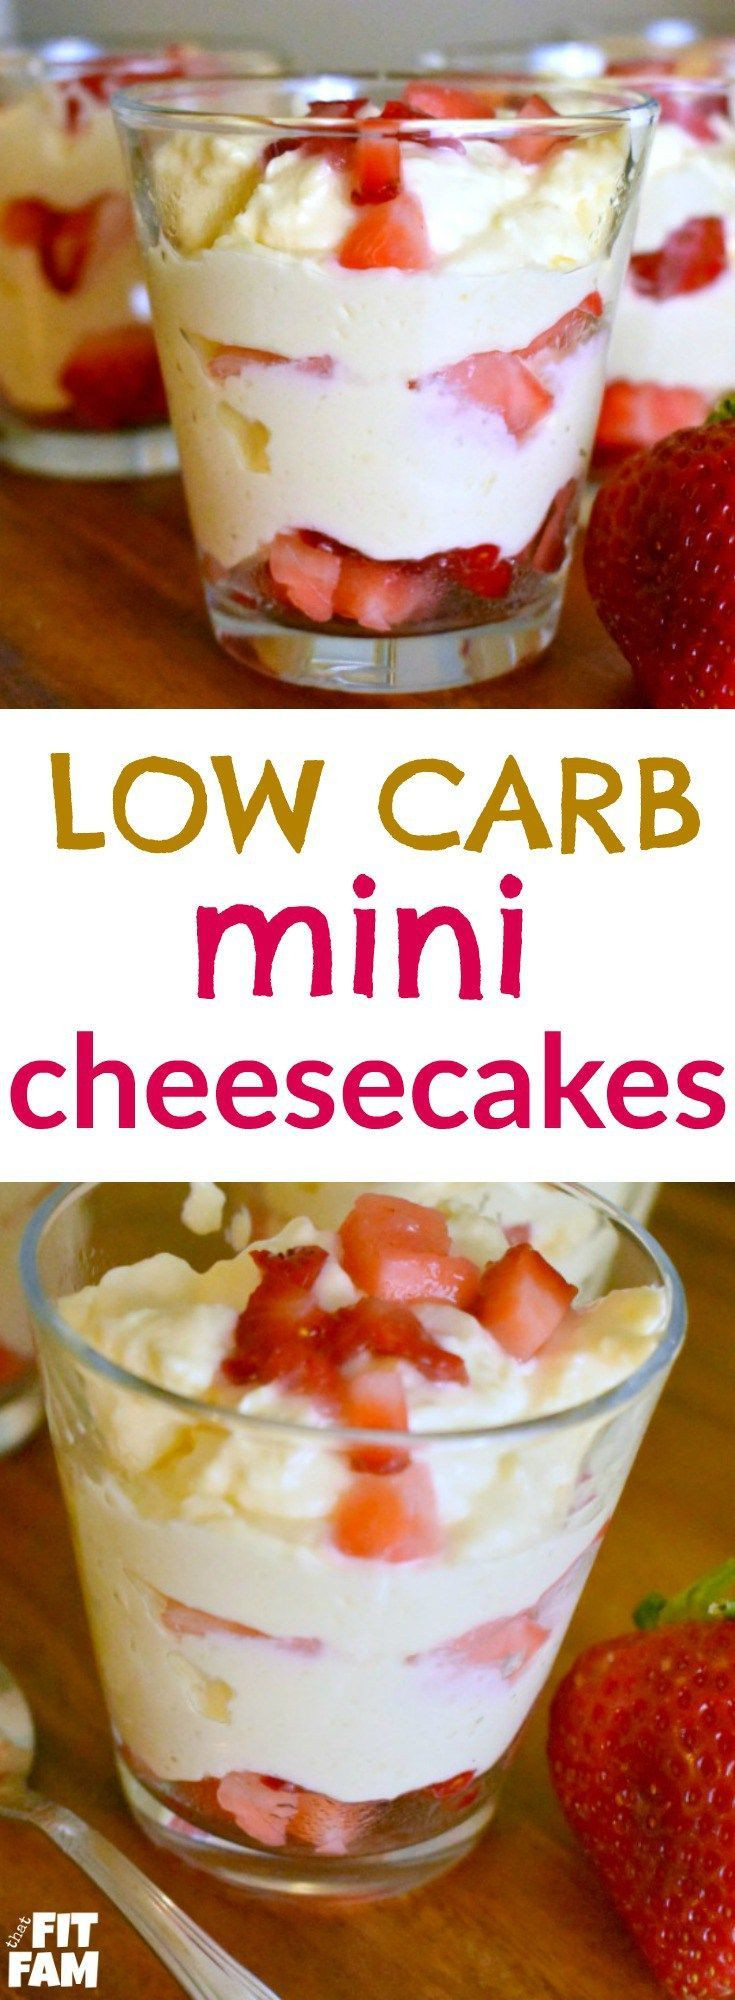 Healthy Low Sugar Desserts
 Best 25 Low Carb Desserts ideas on Pinterest